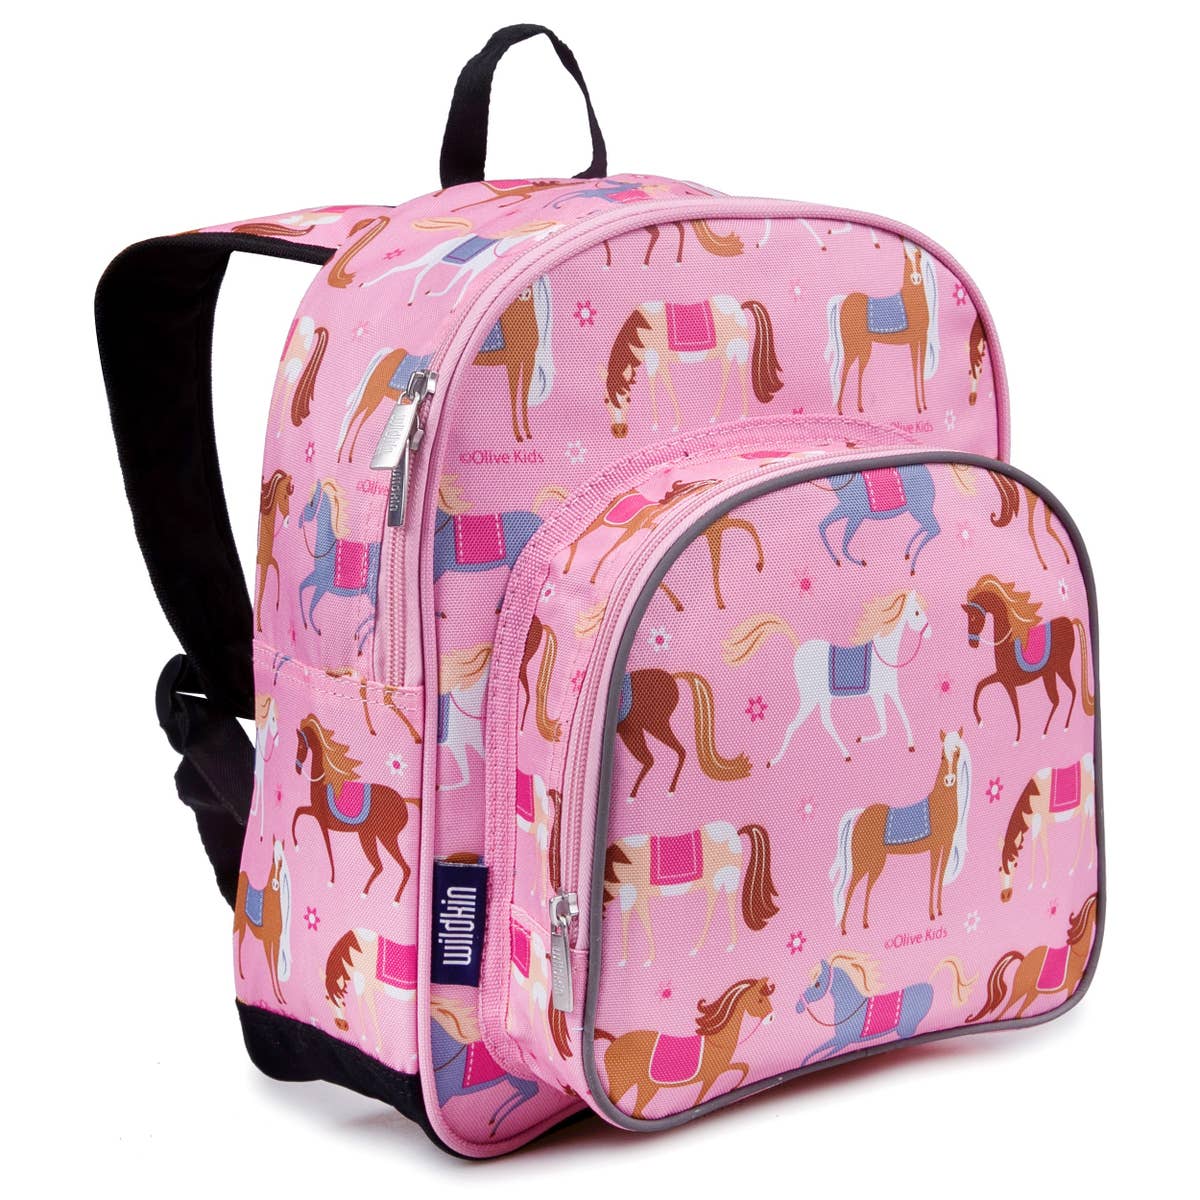 Wildkin 12 inch Backpack - Pink Horses